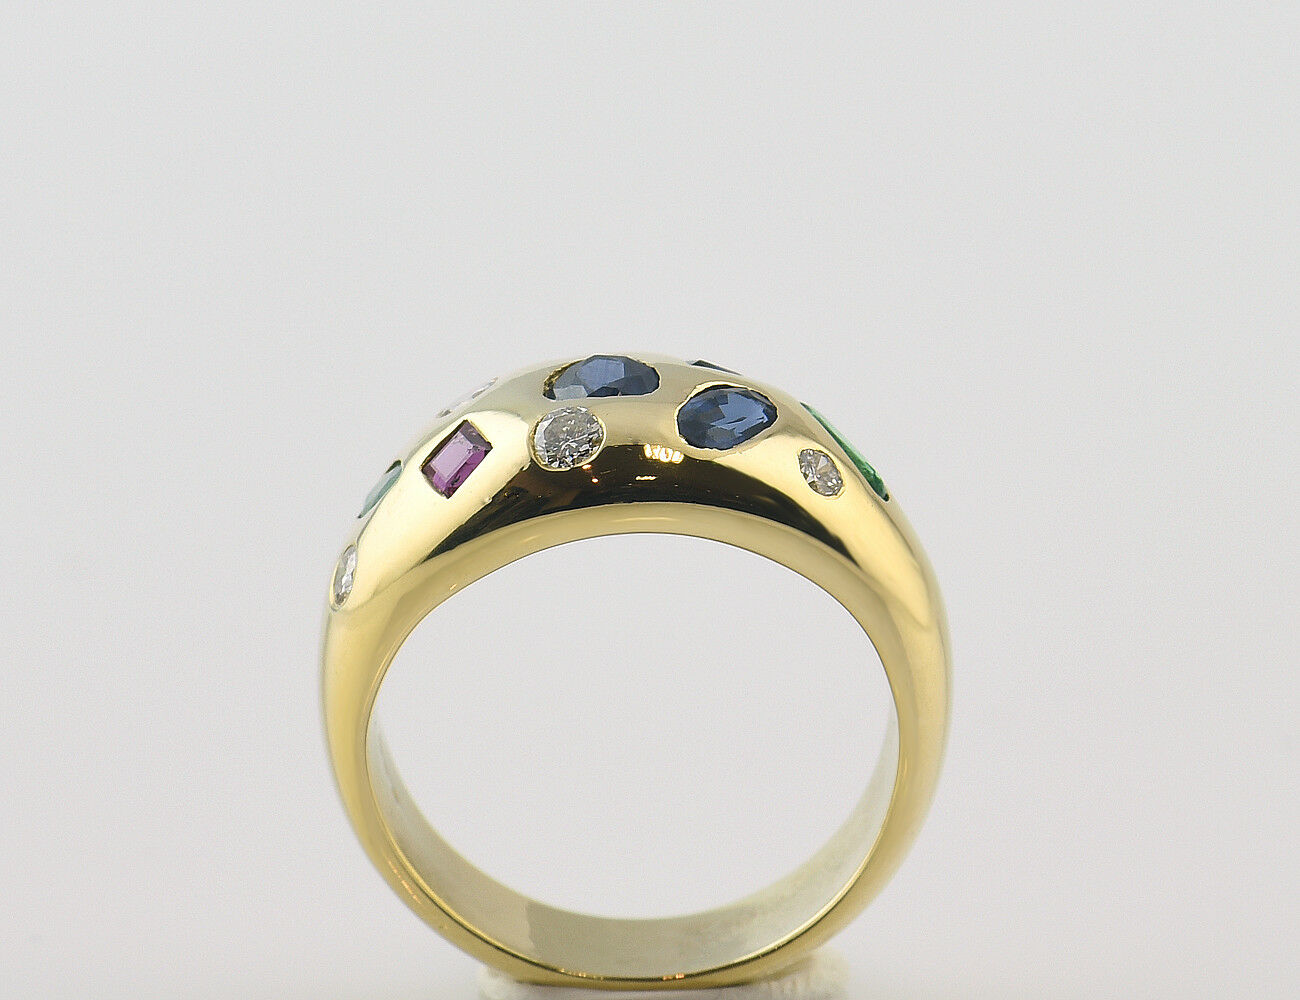 Multicolor Ring Gold 585 mit Brillant Rubin Saphir u Smaragd Goldring 14 kt